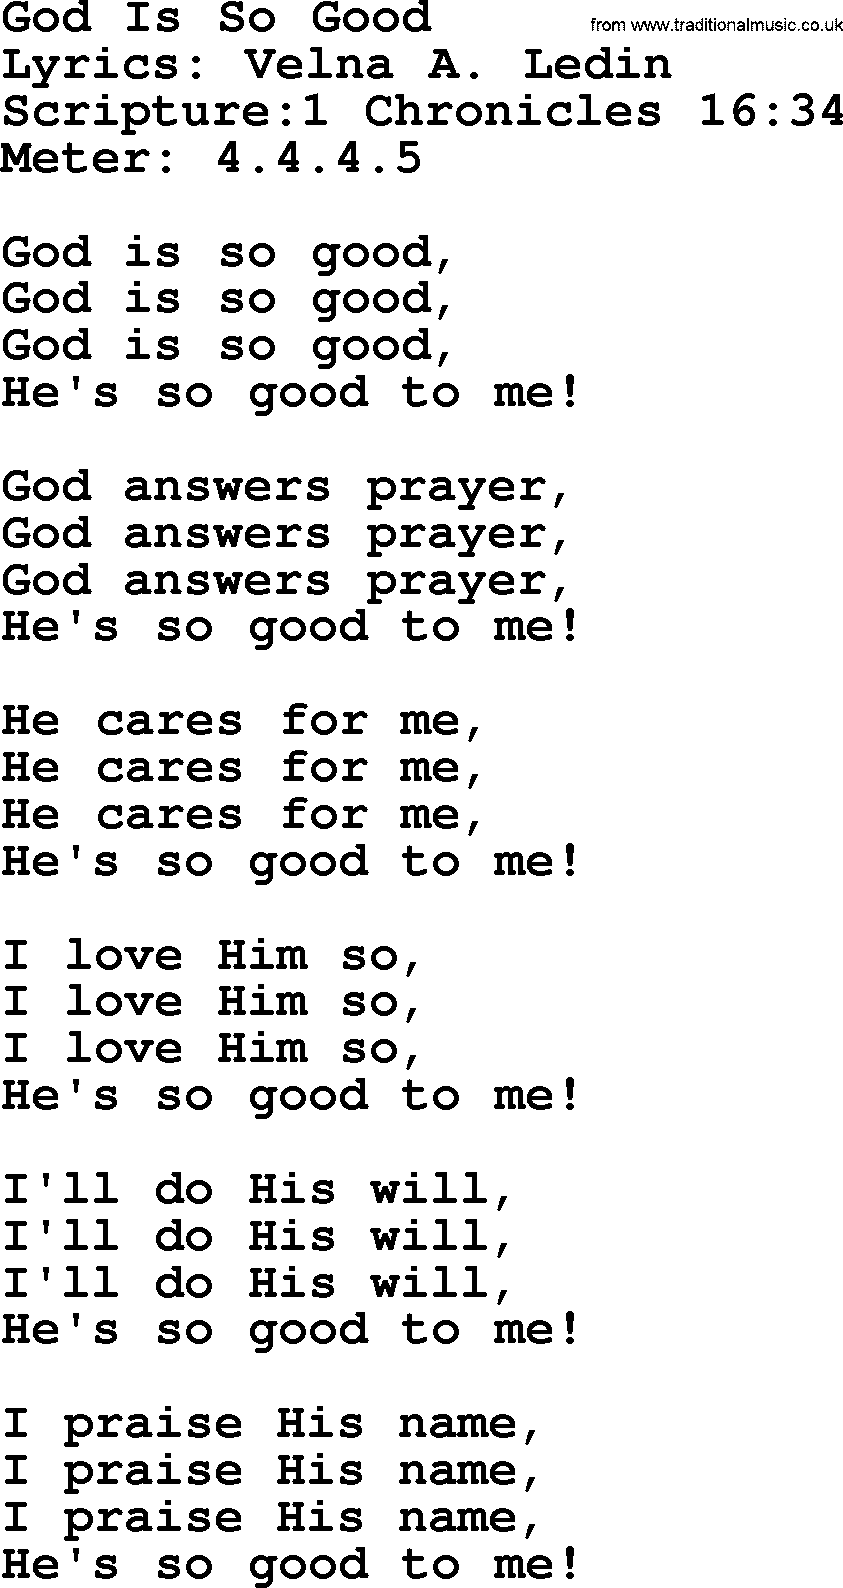 Hymns about  Angels, Hymn: God Is So Good, lyrics, sheet music, midi & Mp3 music with PDF